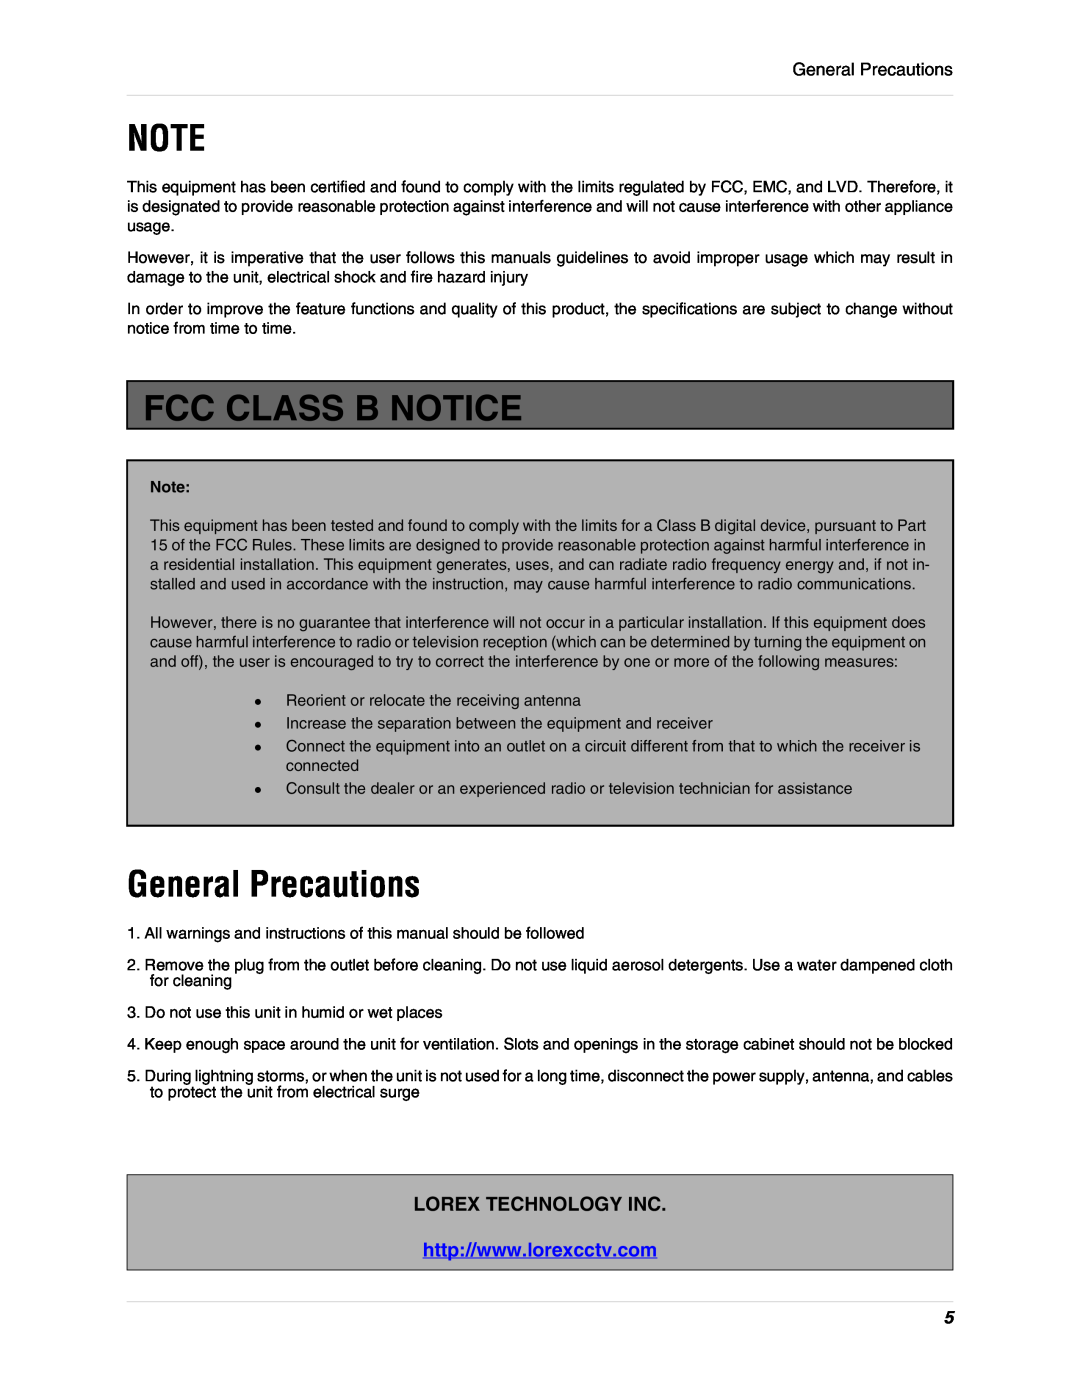 LOREX Technology L19lD1616501 instruction manual Fcc Class B Notice, General Precautions, Lorex Technology Inc 